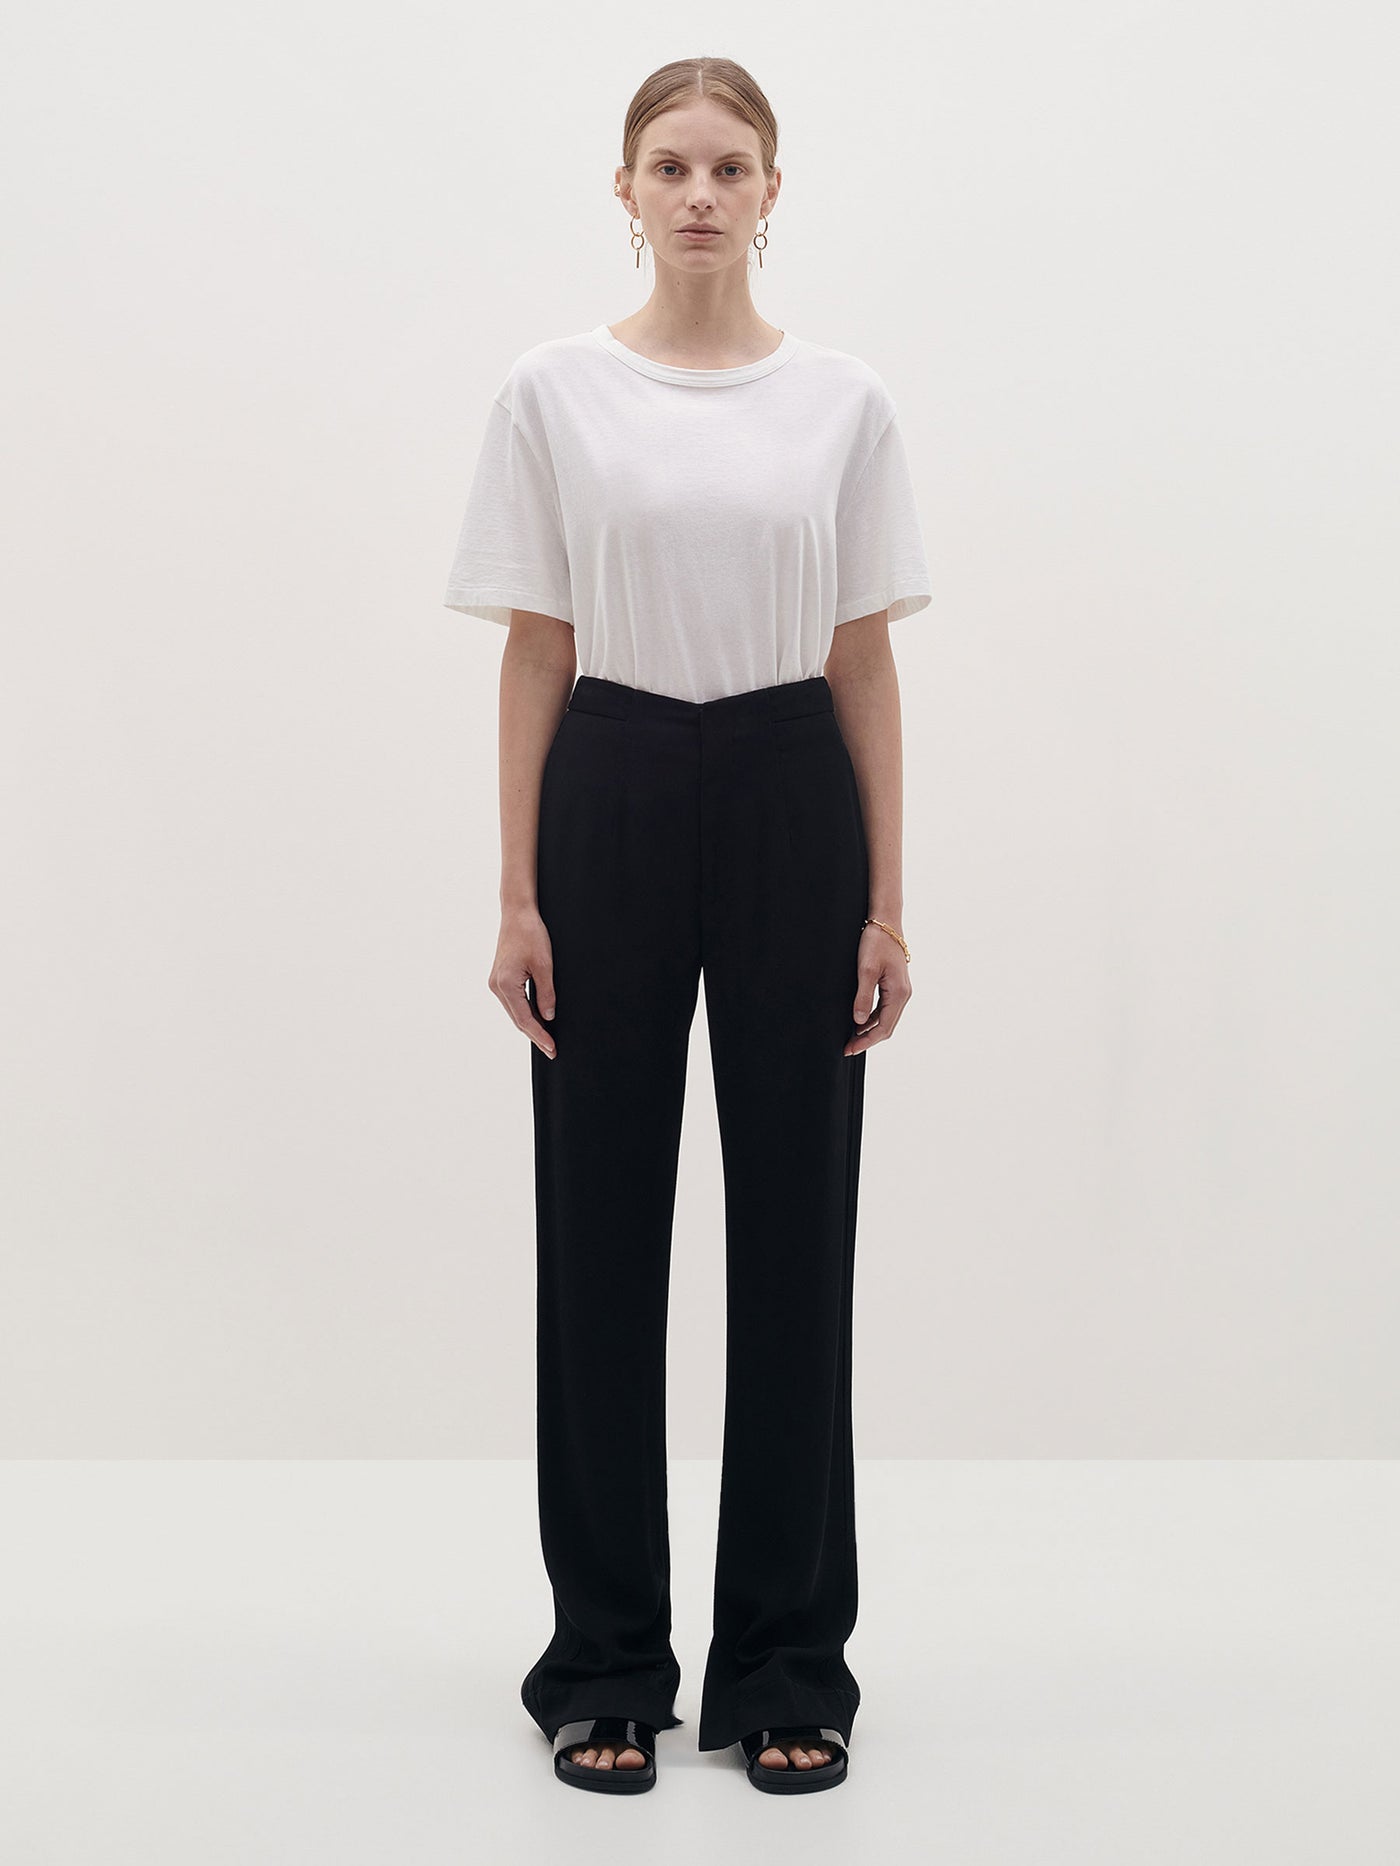 Asymmetric White Shirt Dress with contrast 3d mesh pockets – Ankur j